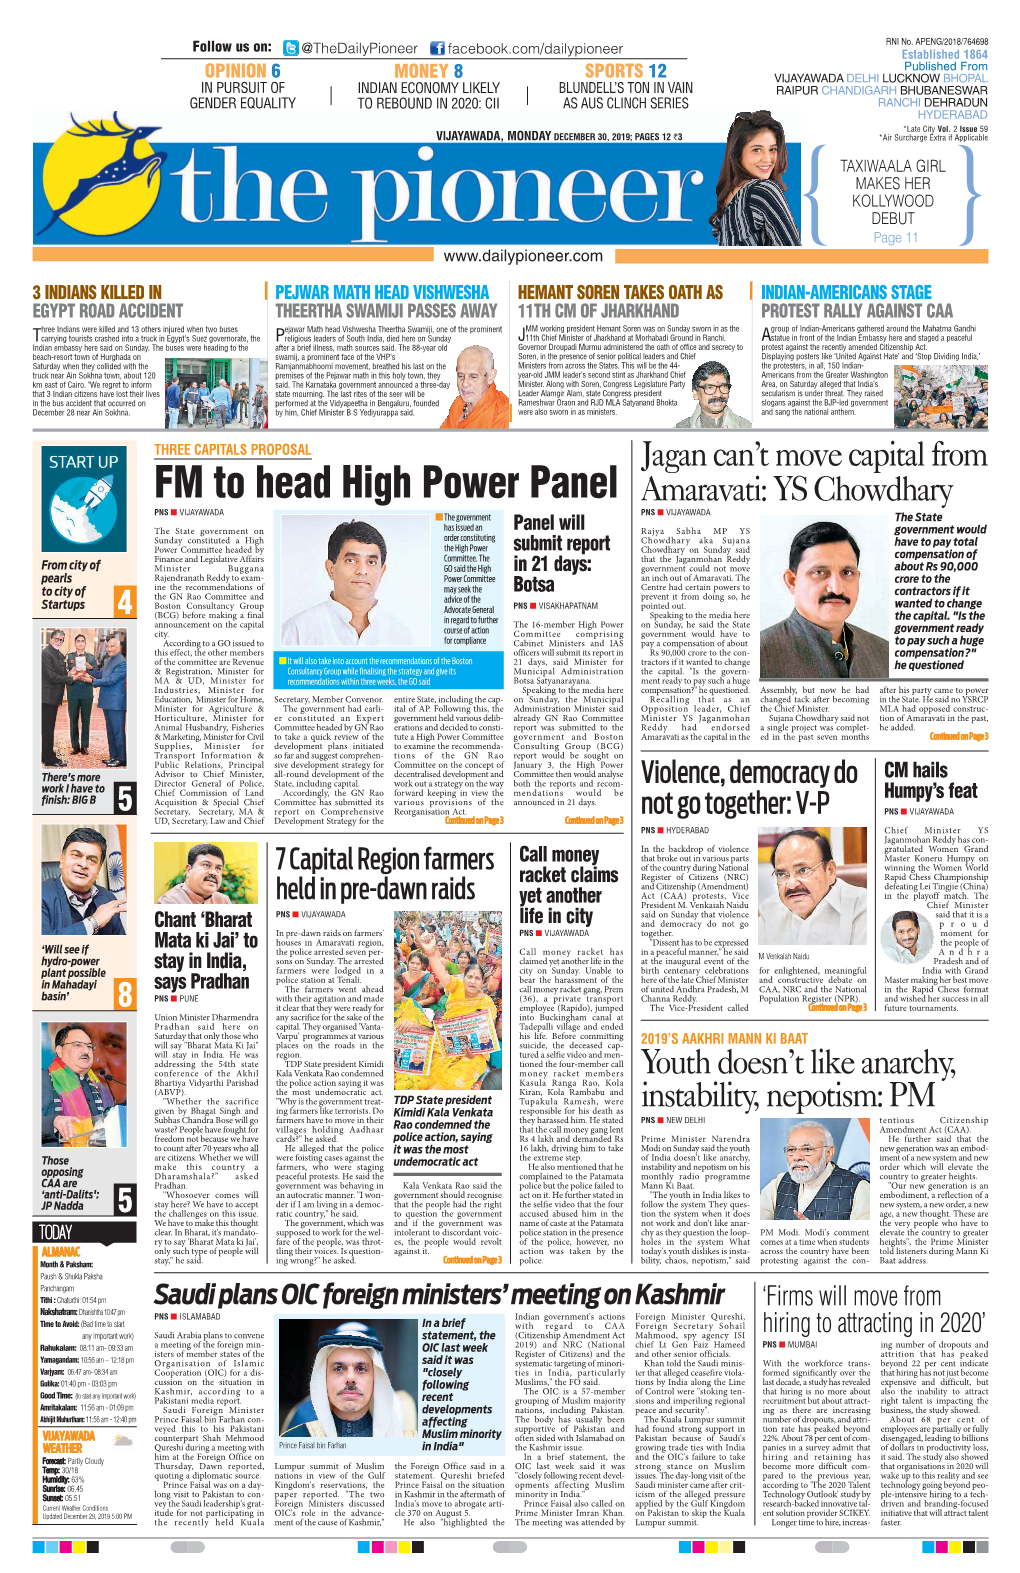 FM to Head High Power Panel